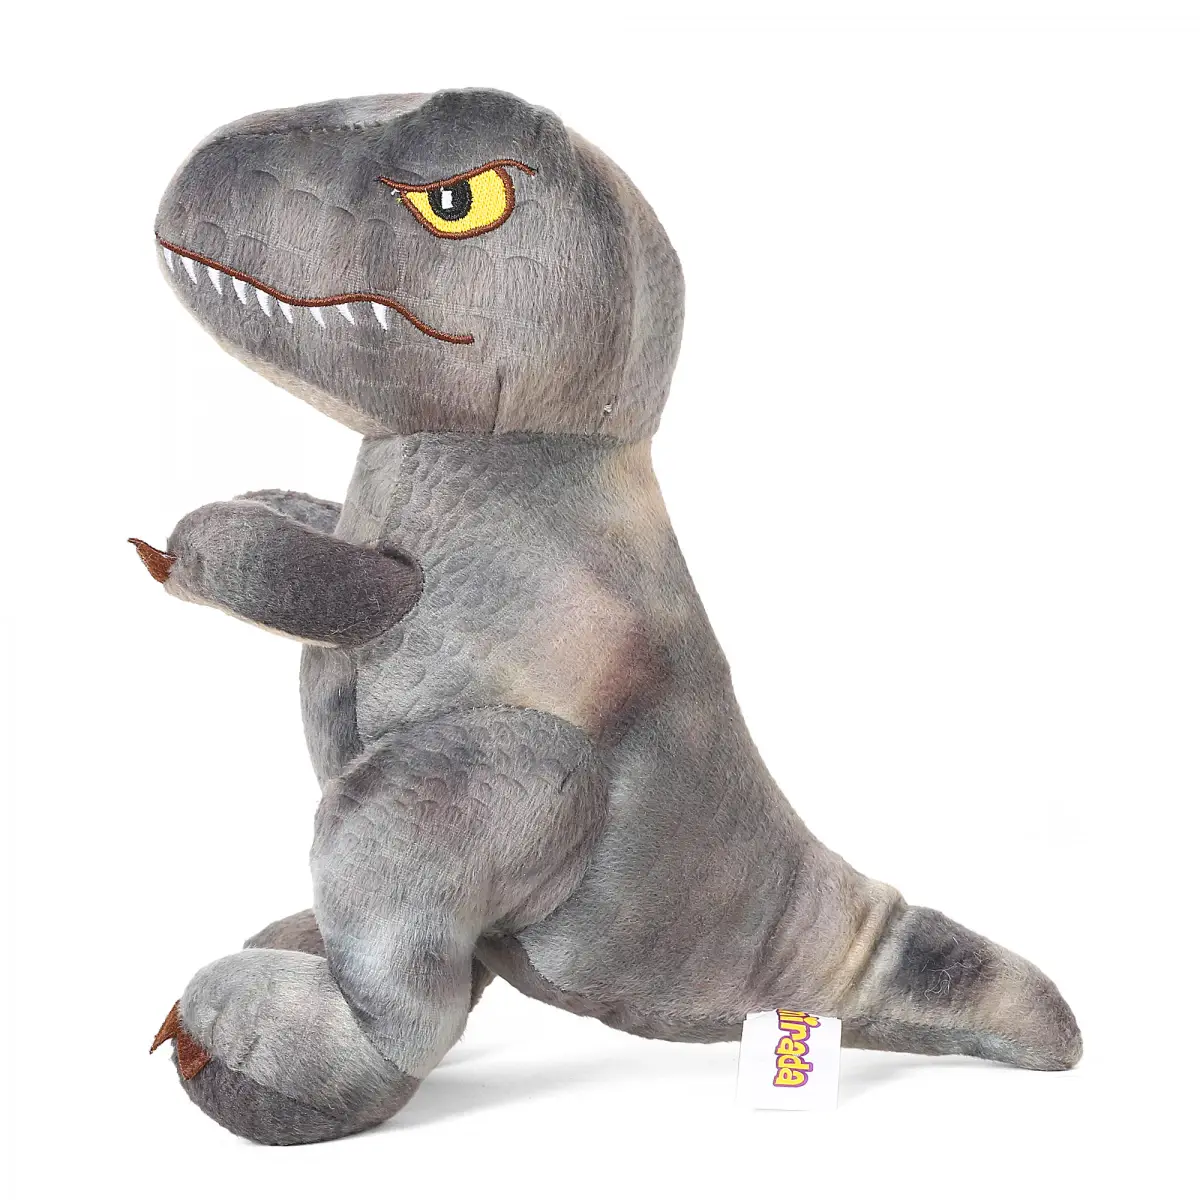 Mirada Textured Sitting Dino Soft Toys for Kids, 3M+, Grey